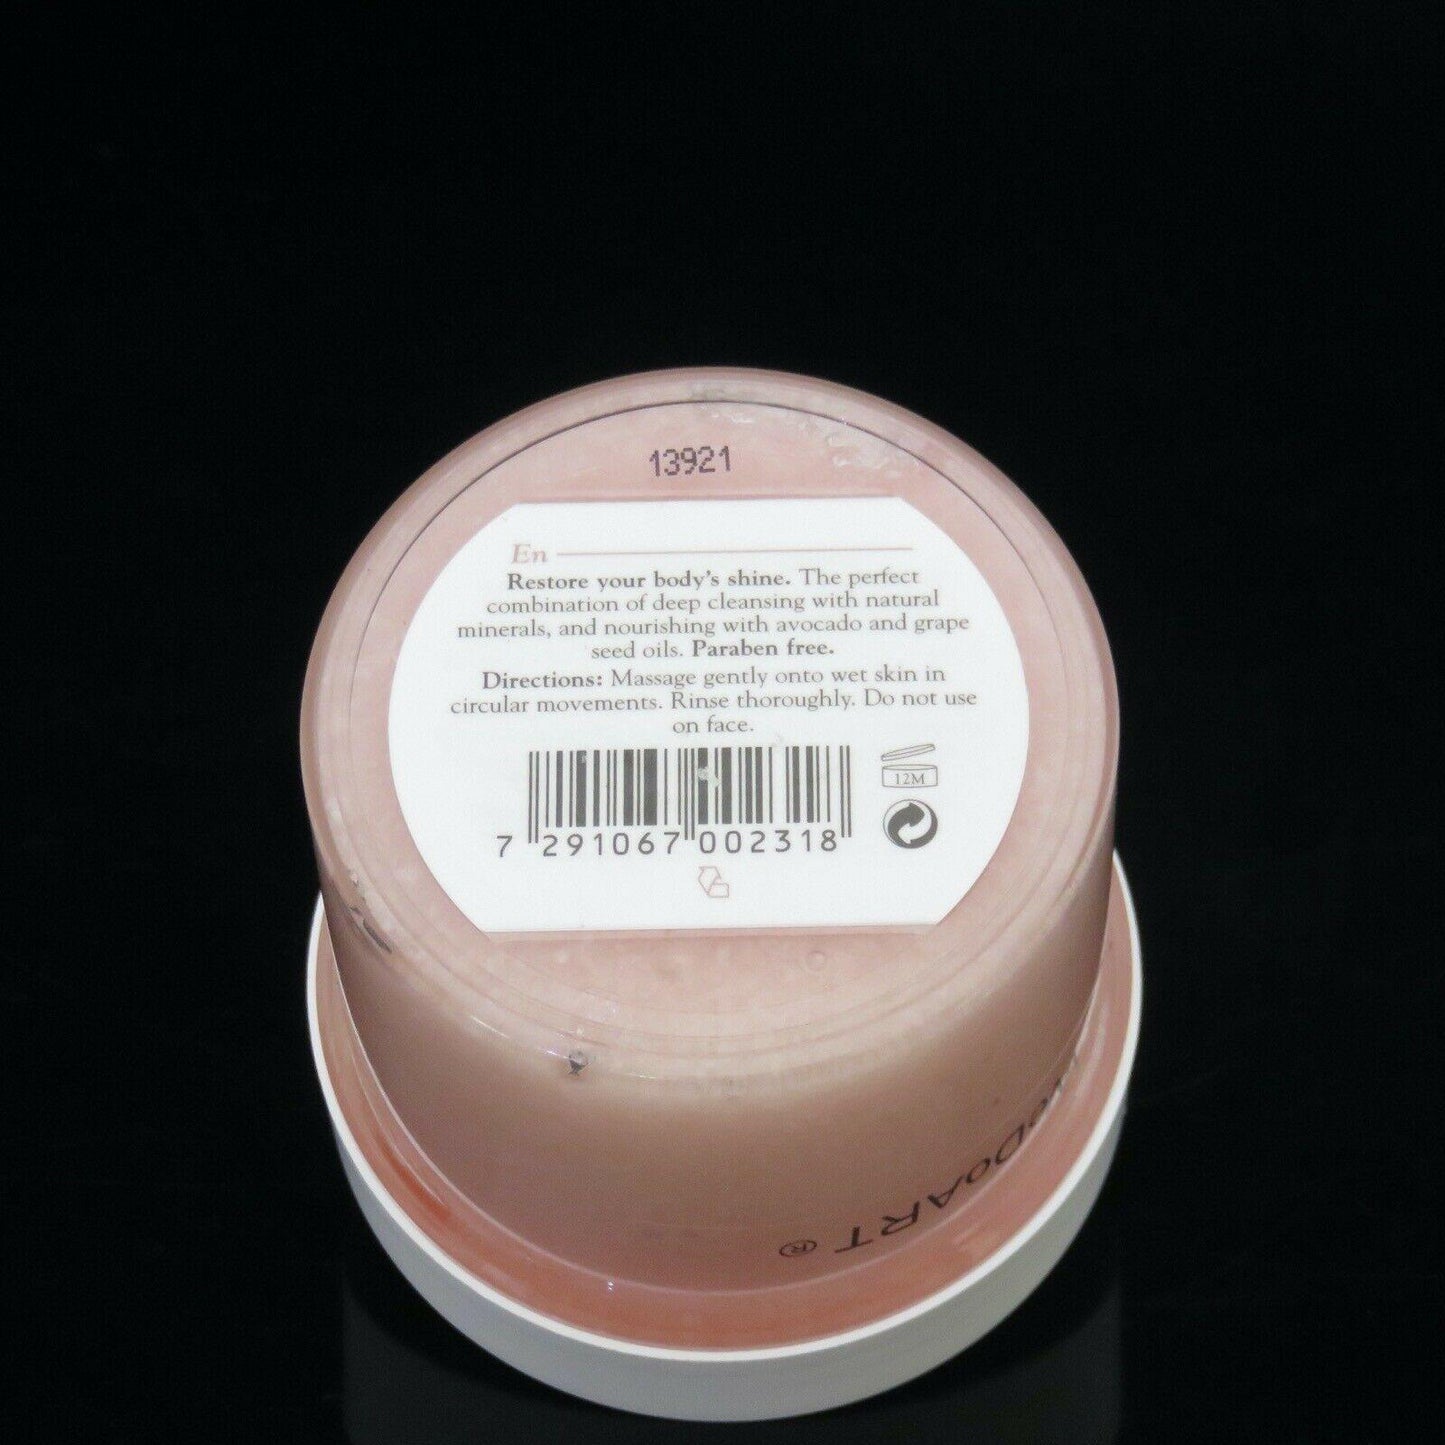 Laline body scrub Vanilla Pink Pepper 240g - 8.54oz - WEDOART-IL